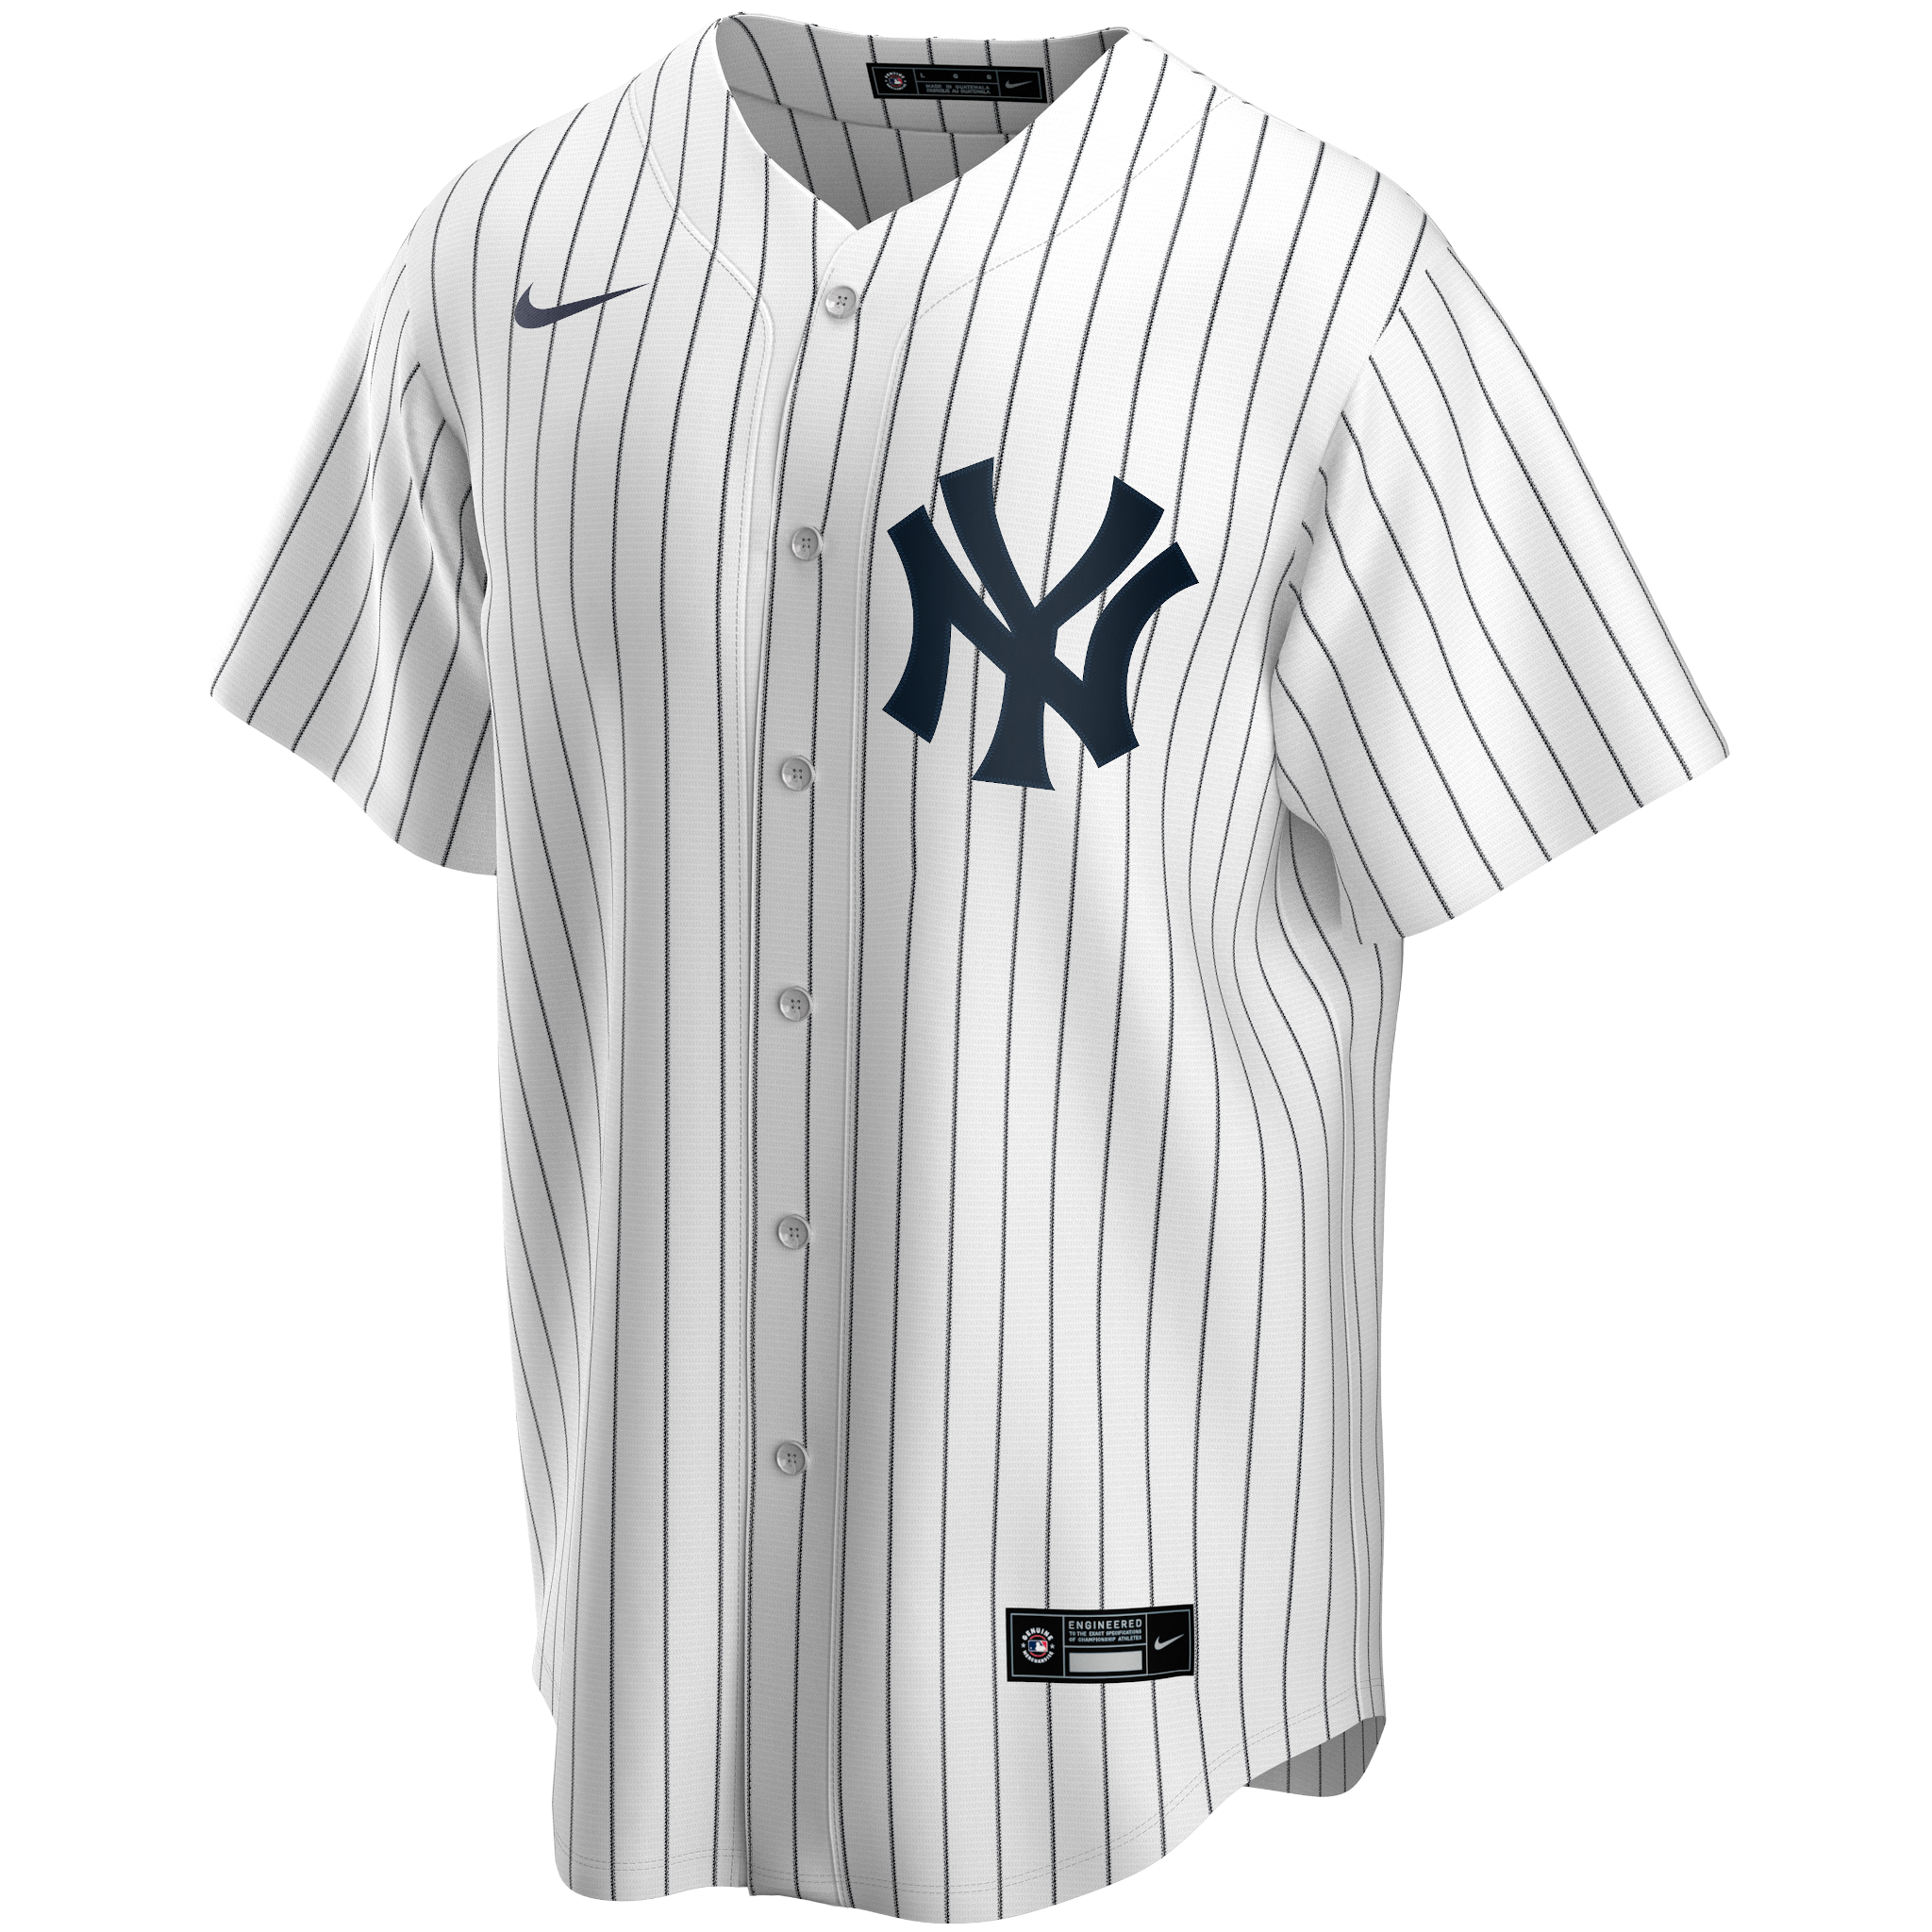 CC Sabathia Autographed P/S New York Yankees Jersey- JSA Authenticated